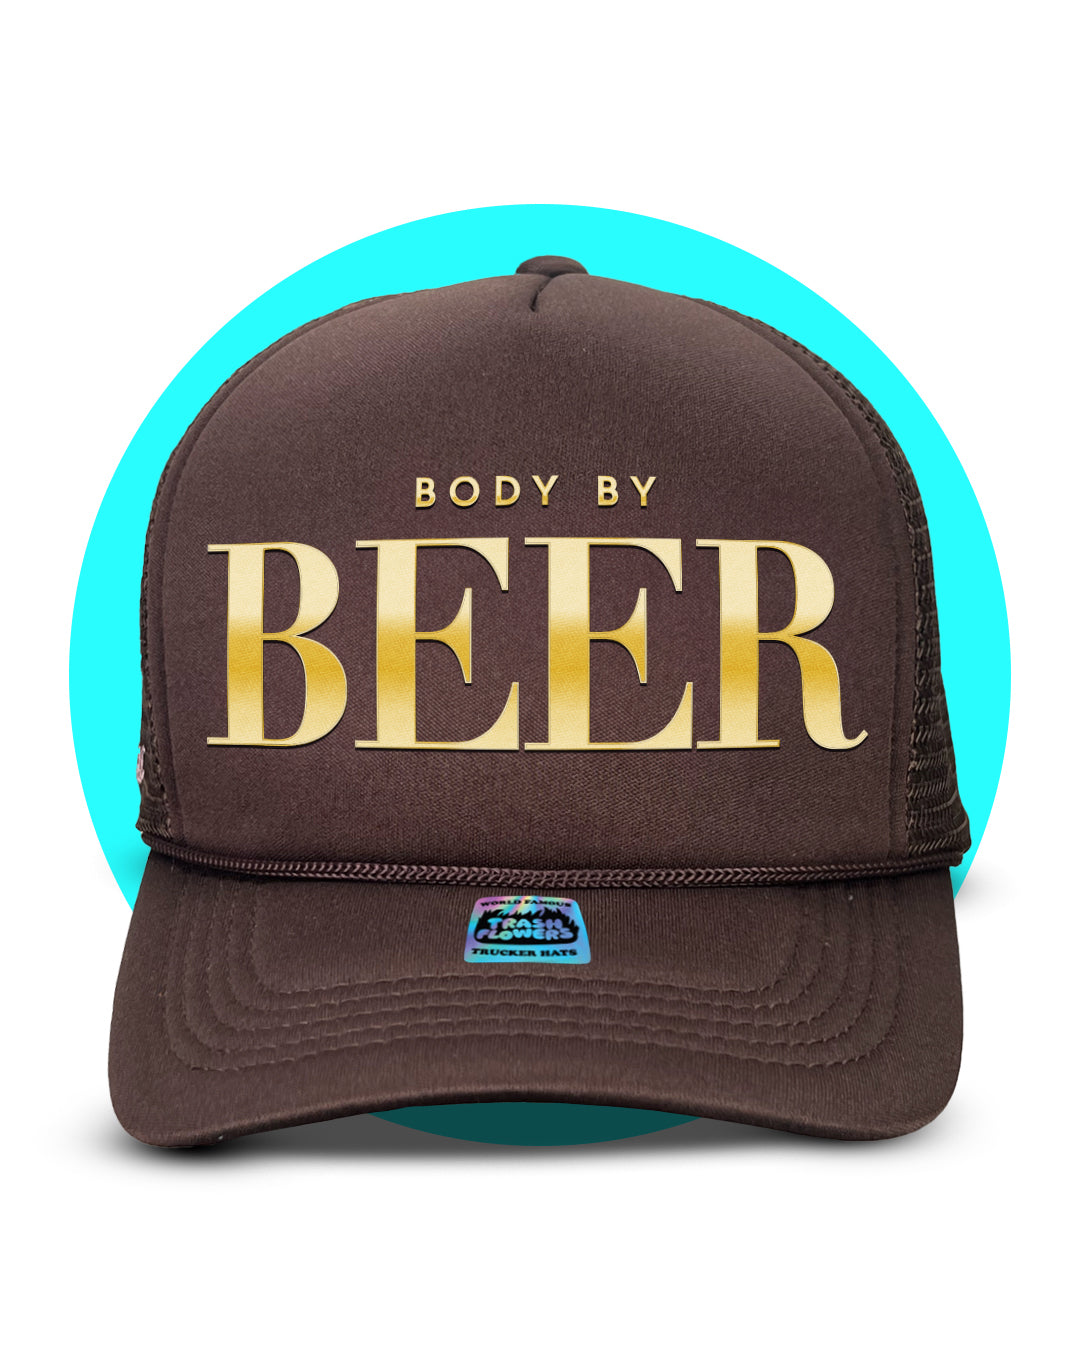 Body by Beer Trucker Hat